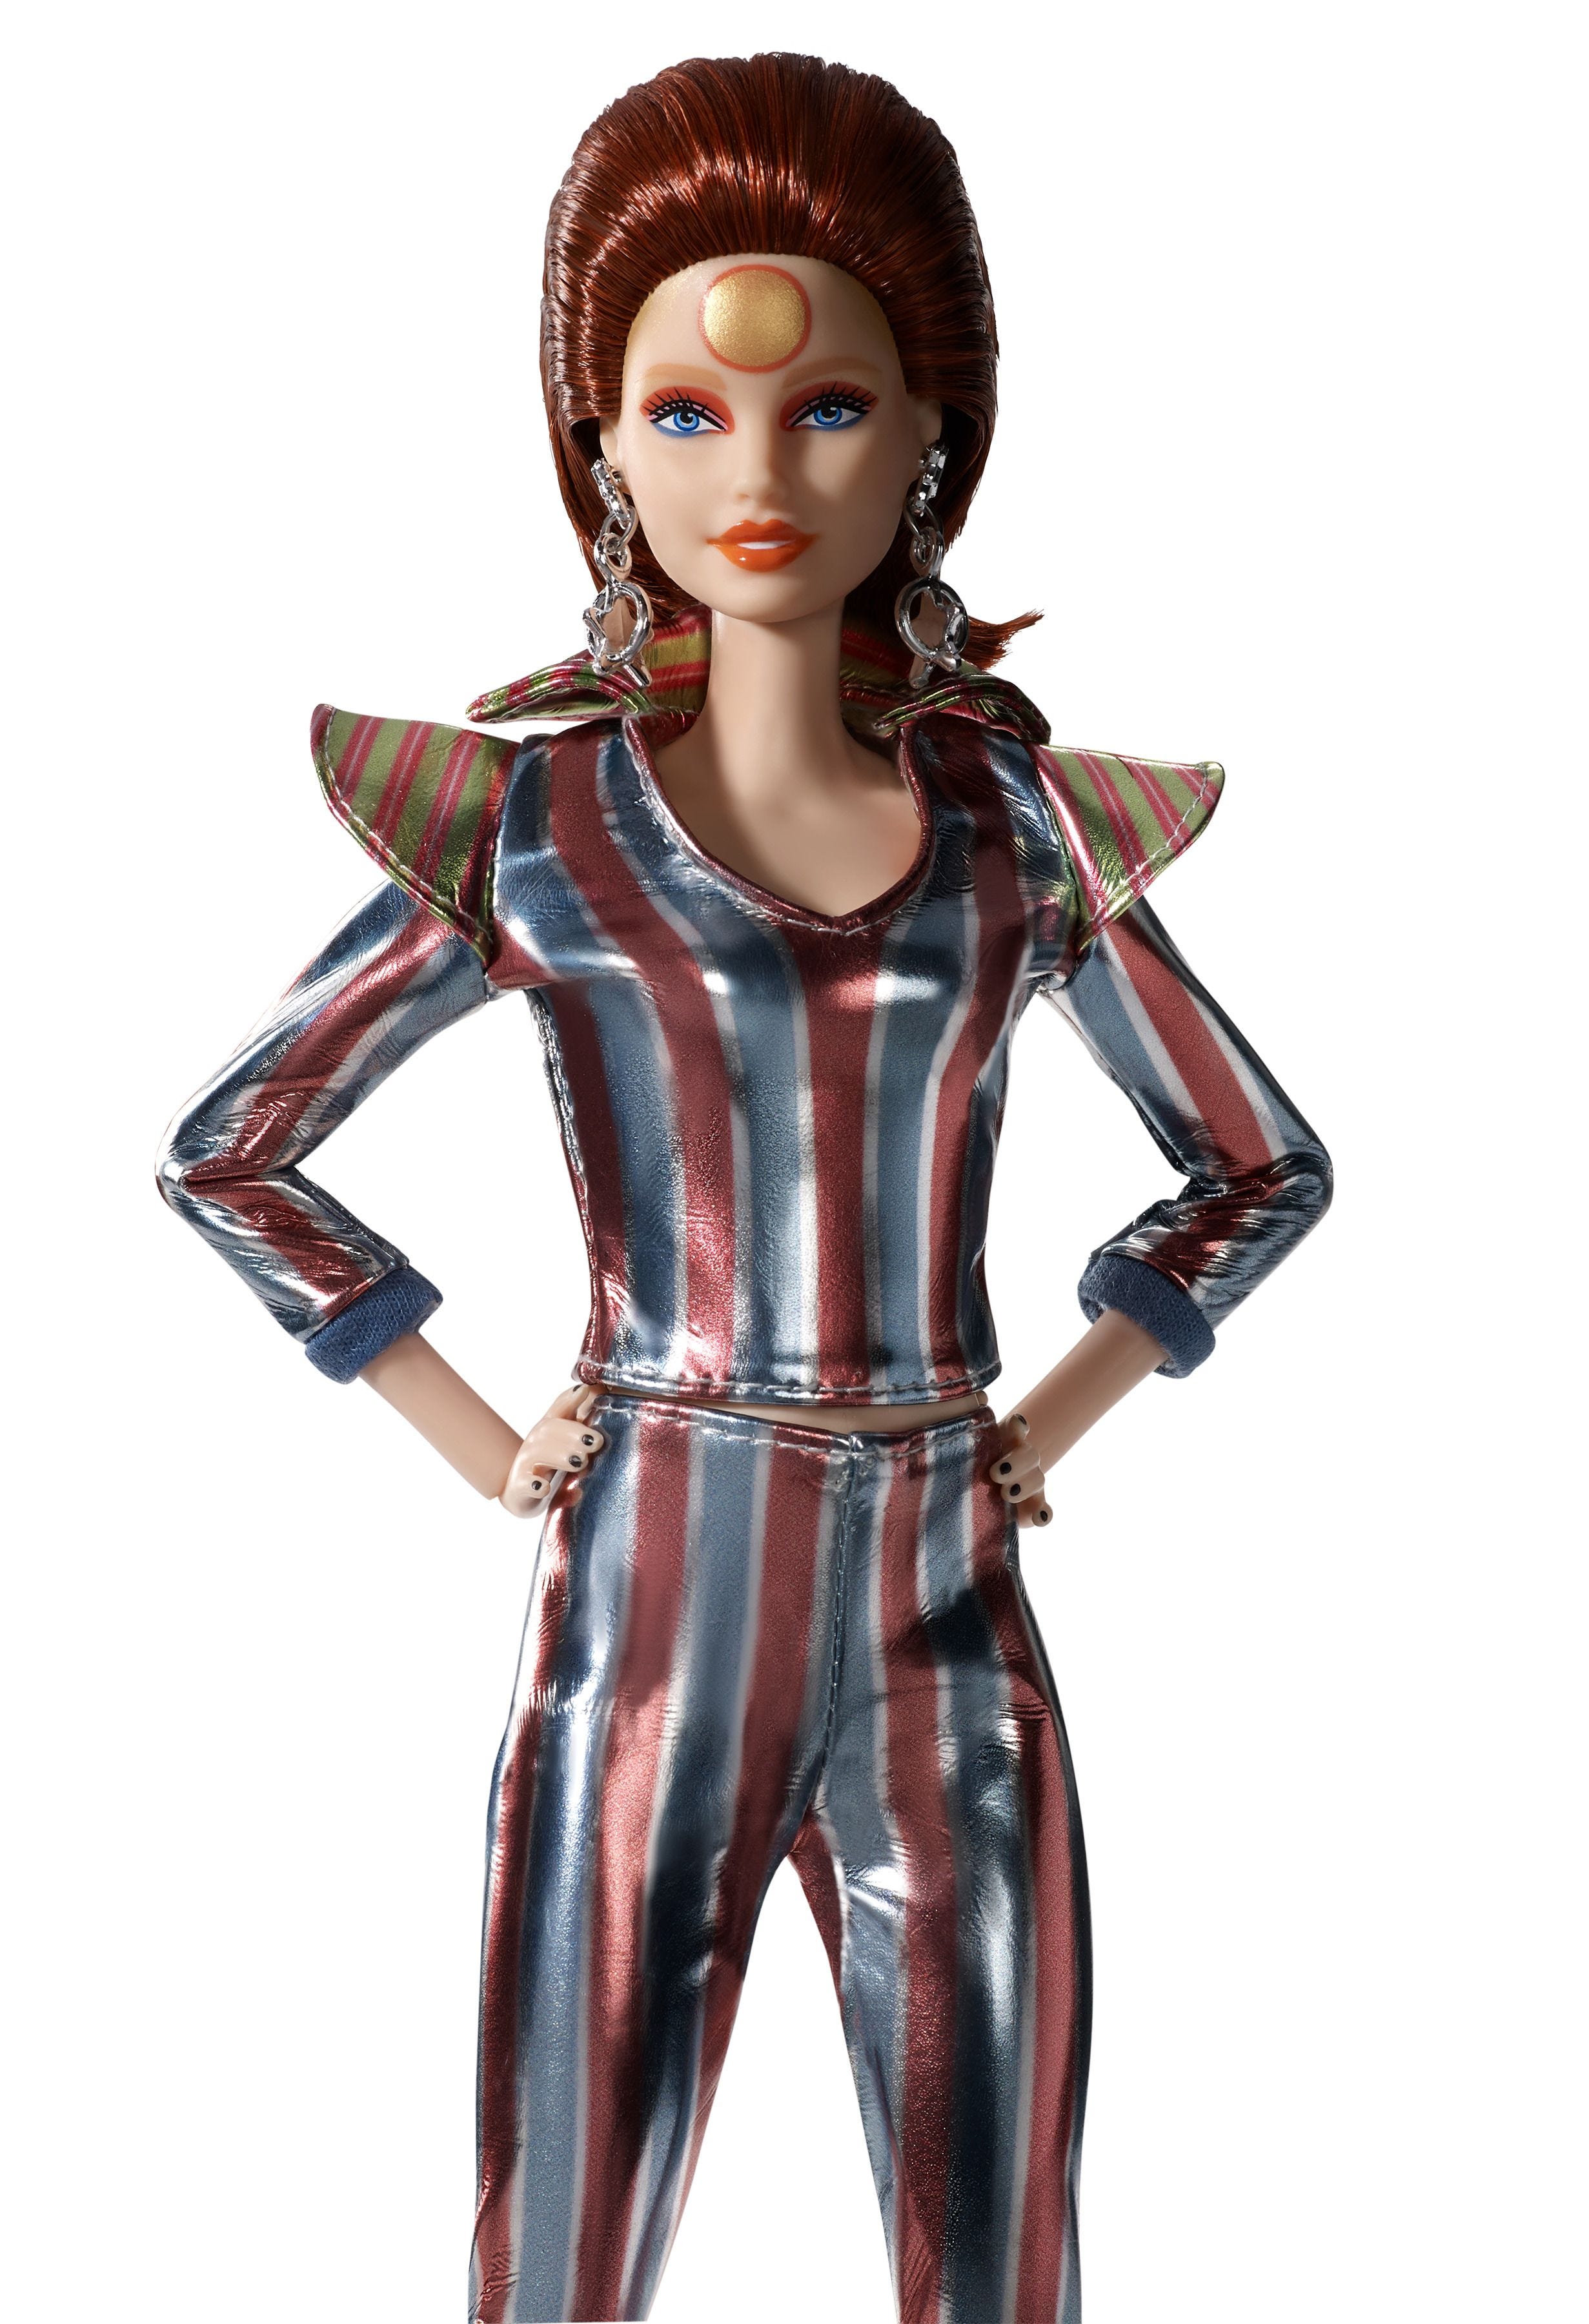 militie Gezag uitrusting Barbie unveils David Bowie doll dressed as Ziggy Stardust